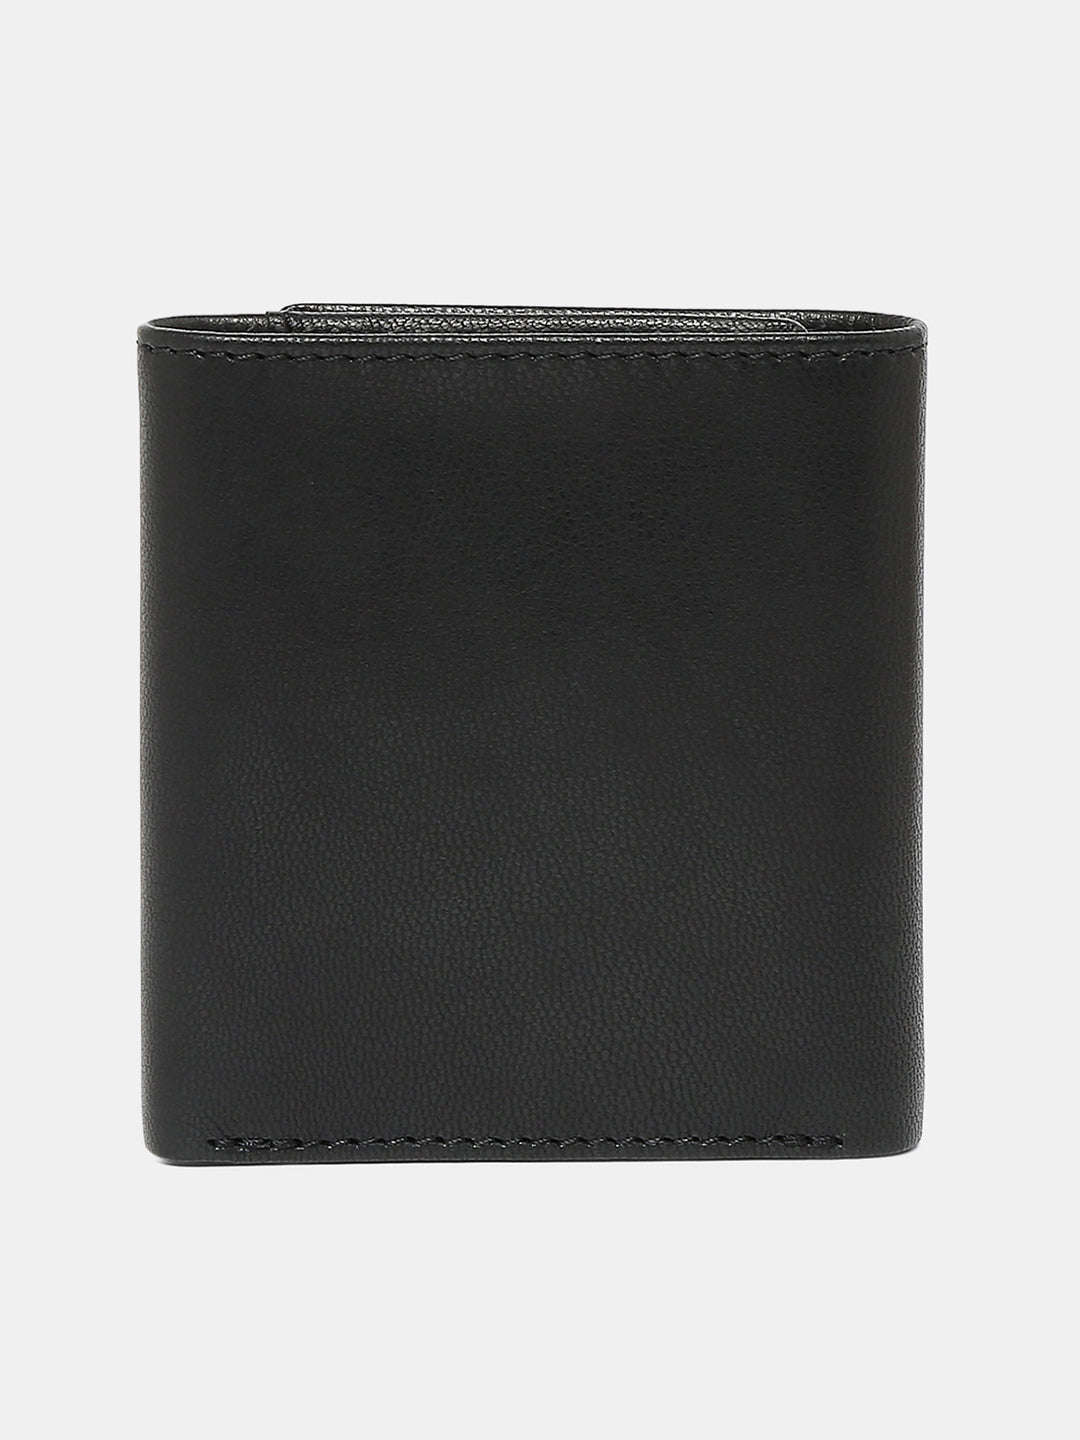 Spykar Men Black Leather Wallet - mawltas016black